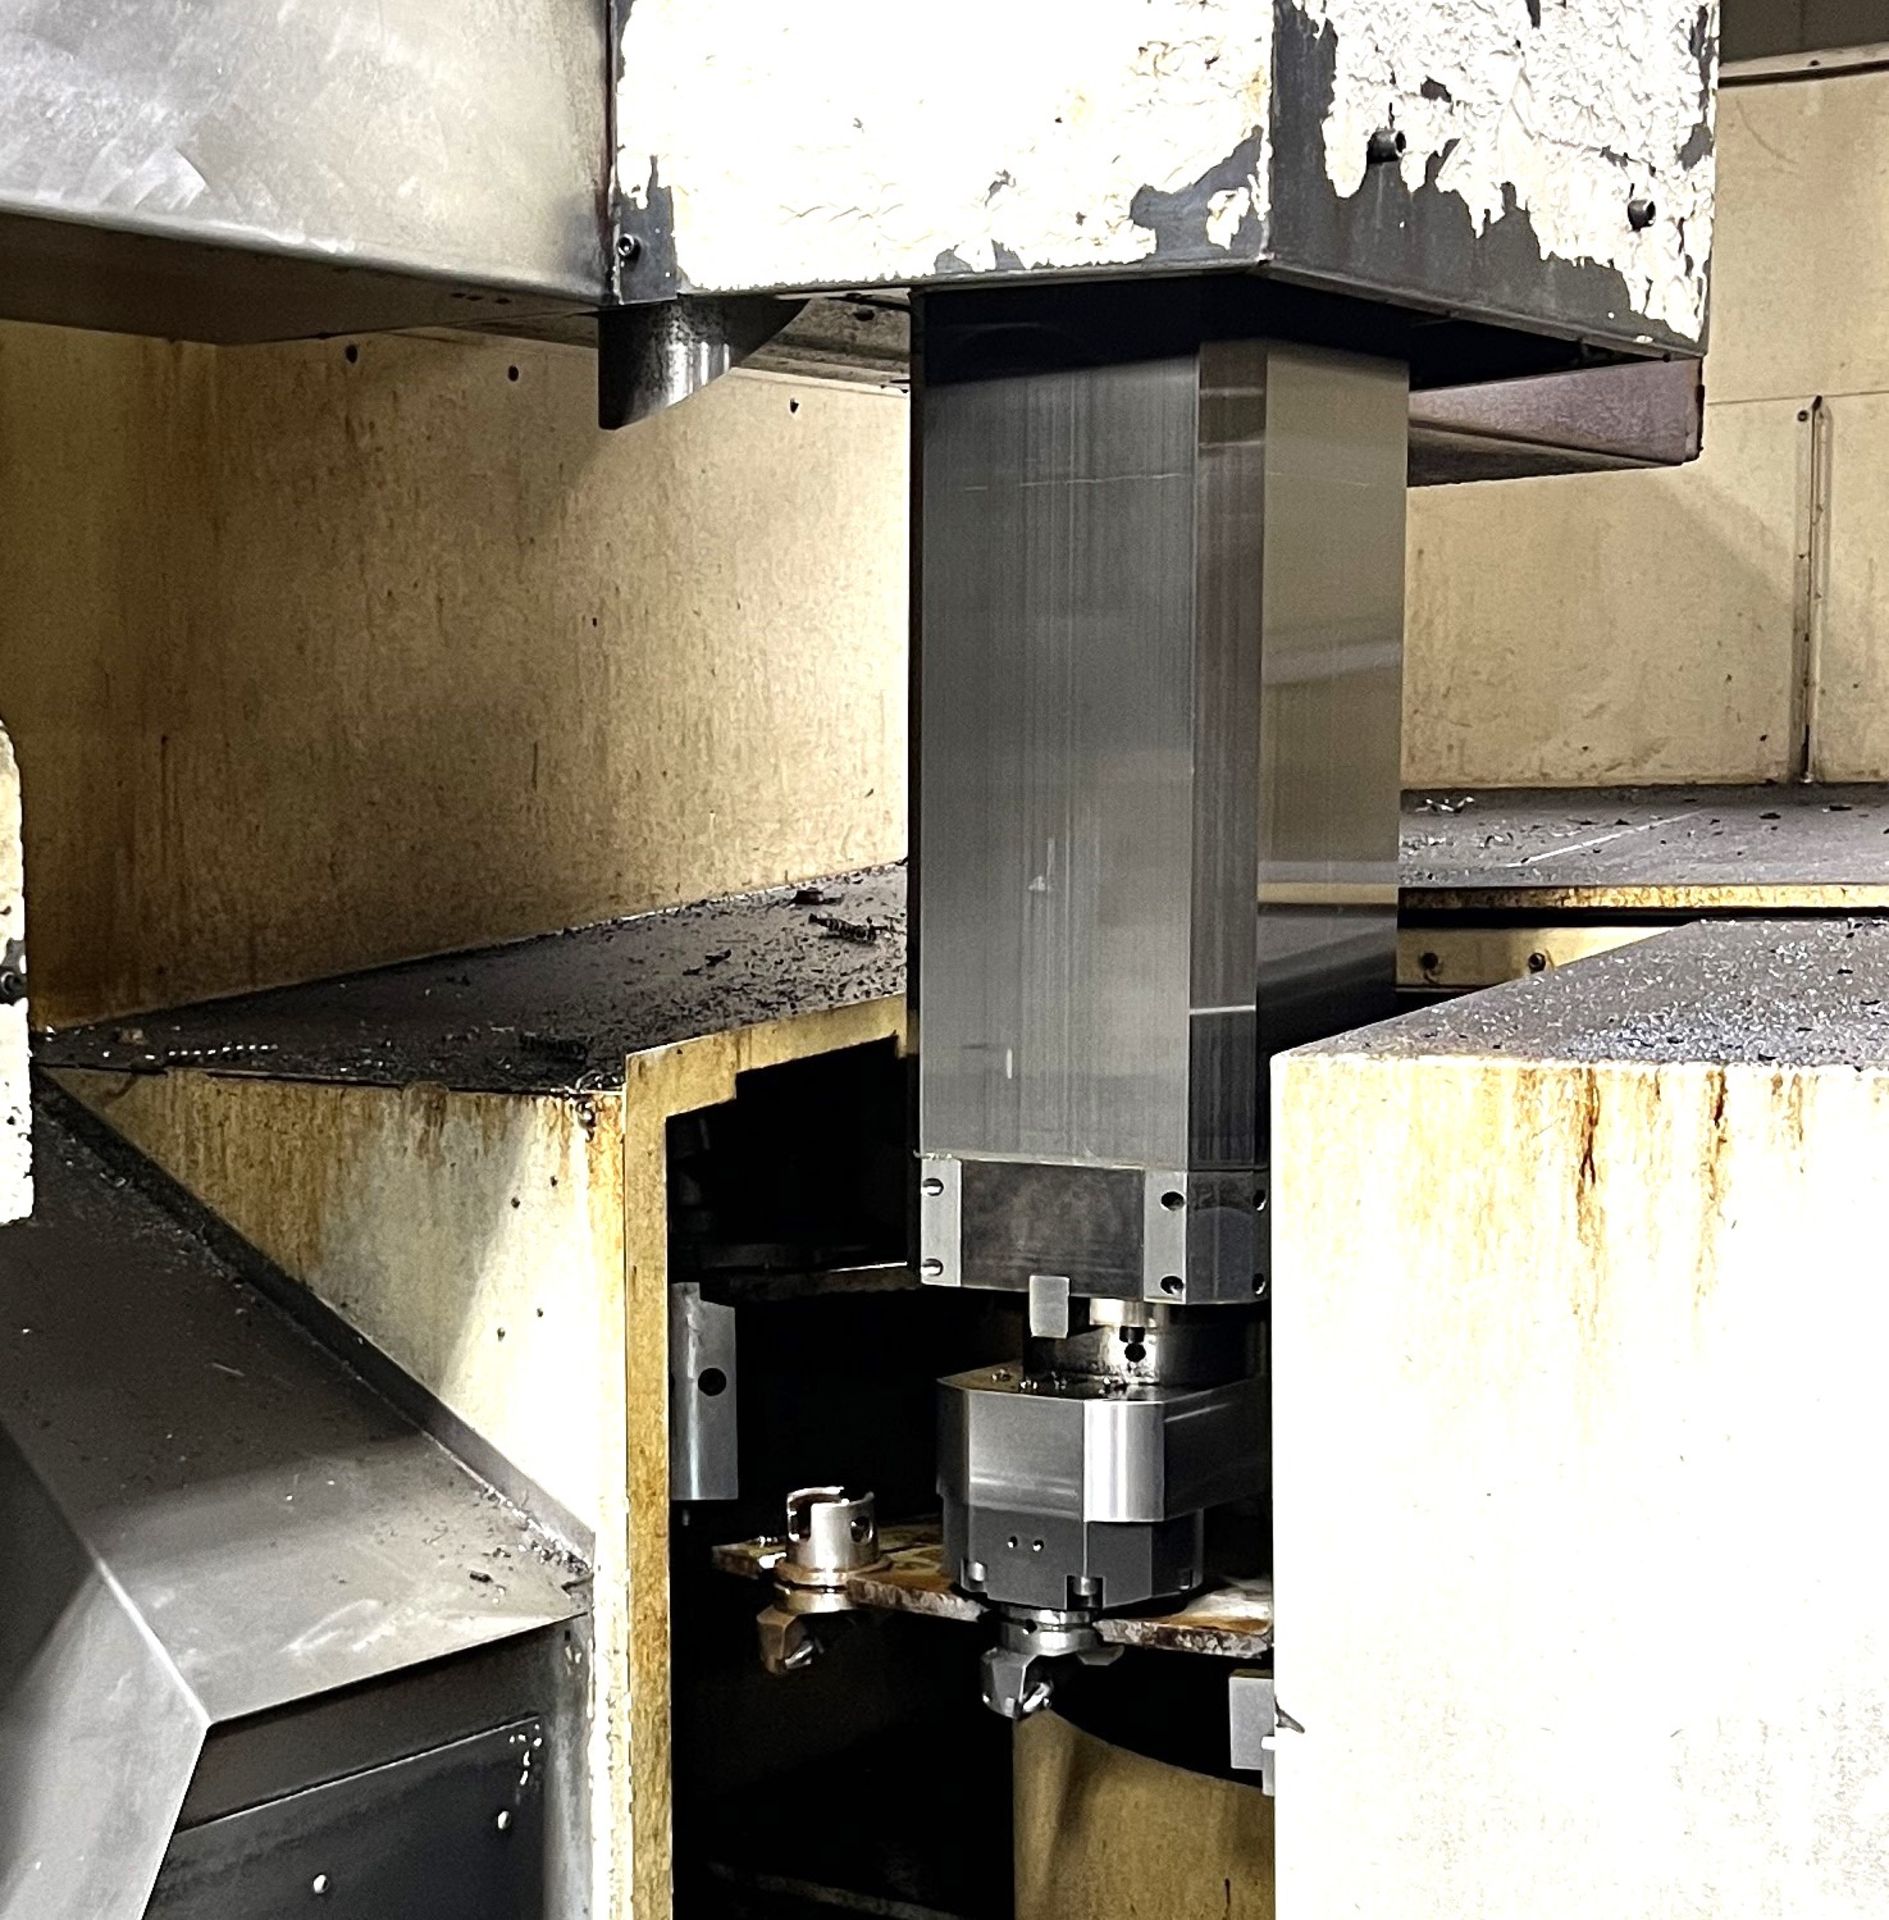 Giddings & Lewis VTC1600 CNC Vertical Boring Mill - Image 4 of 9